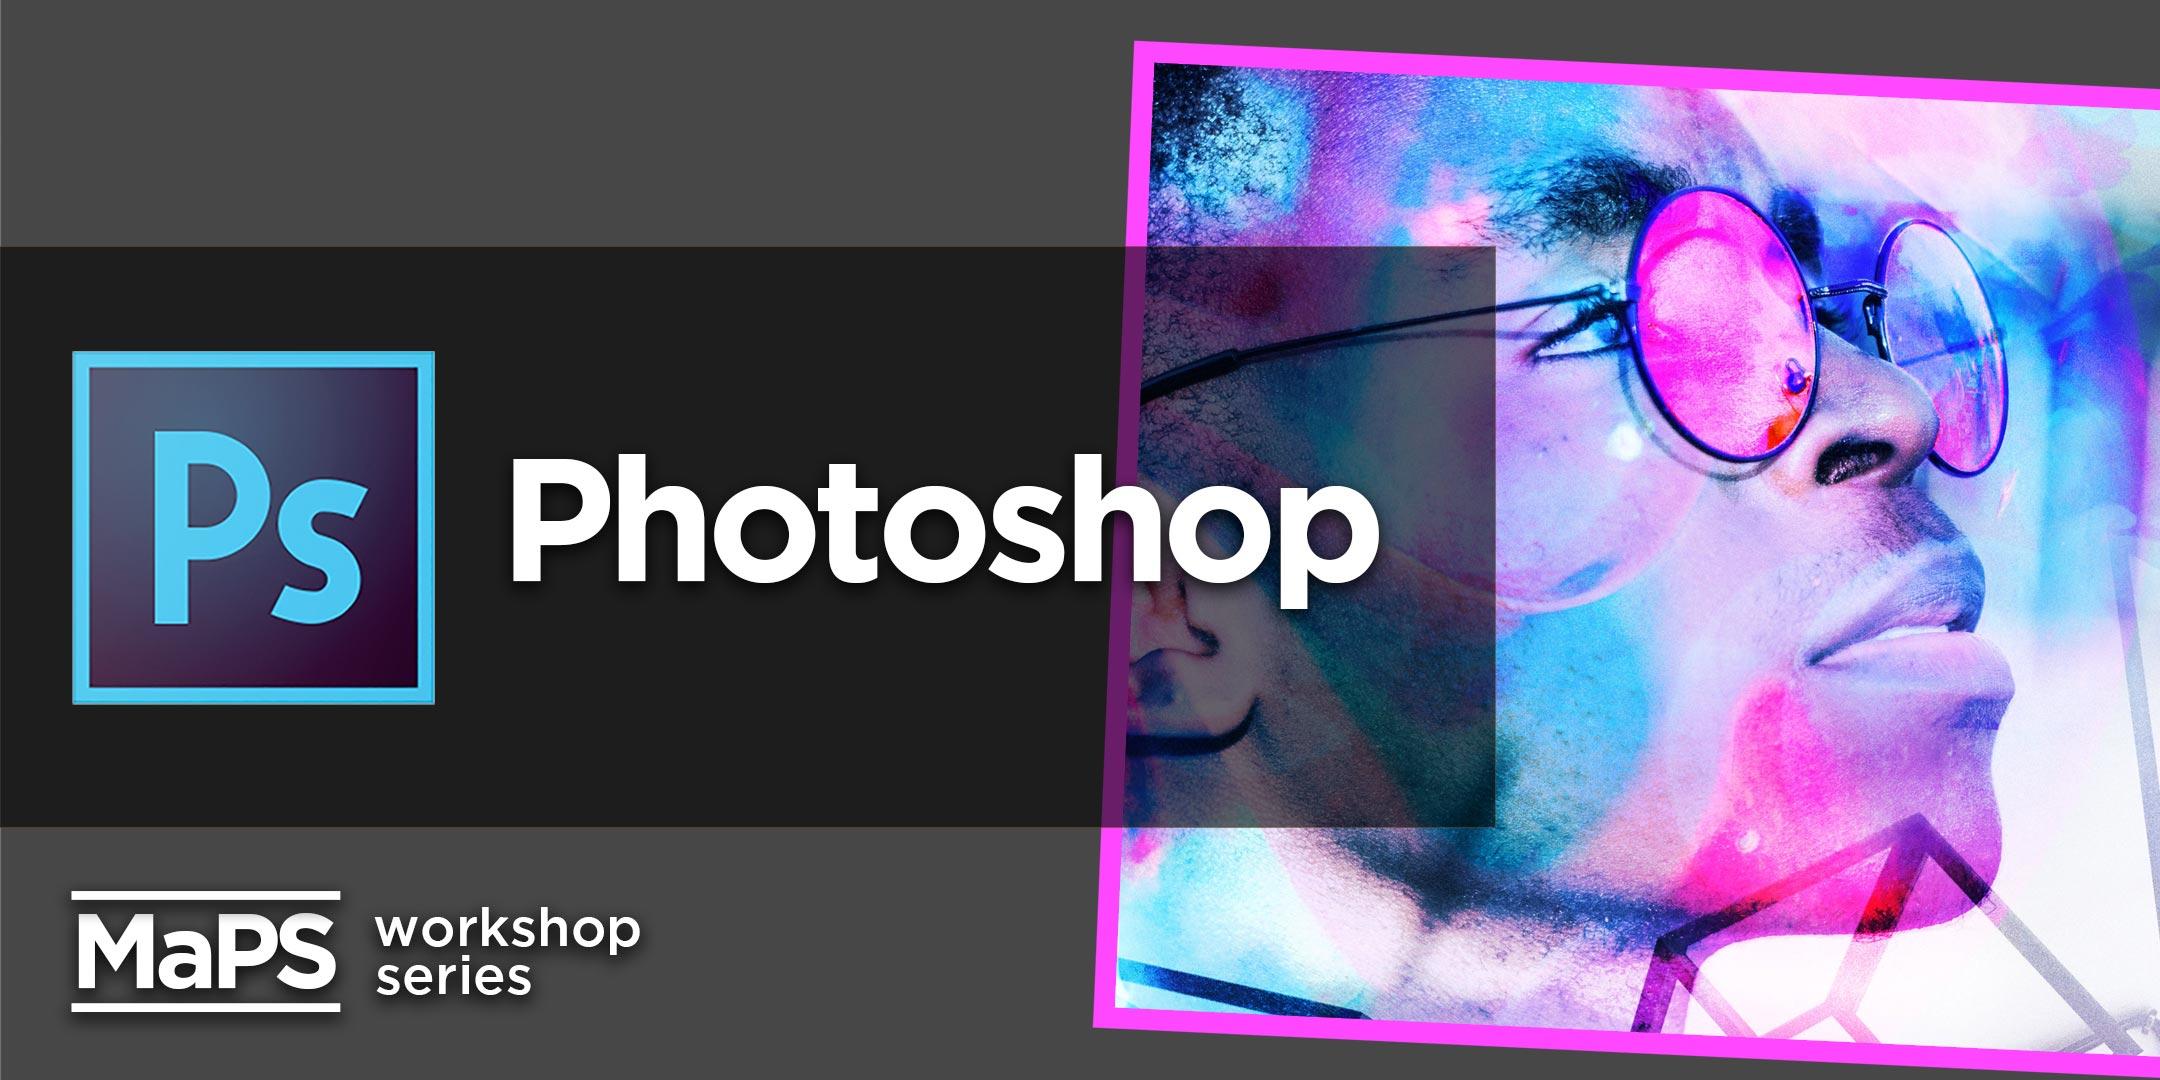 Image Editing Fundamentals in Adobe Photoshop